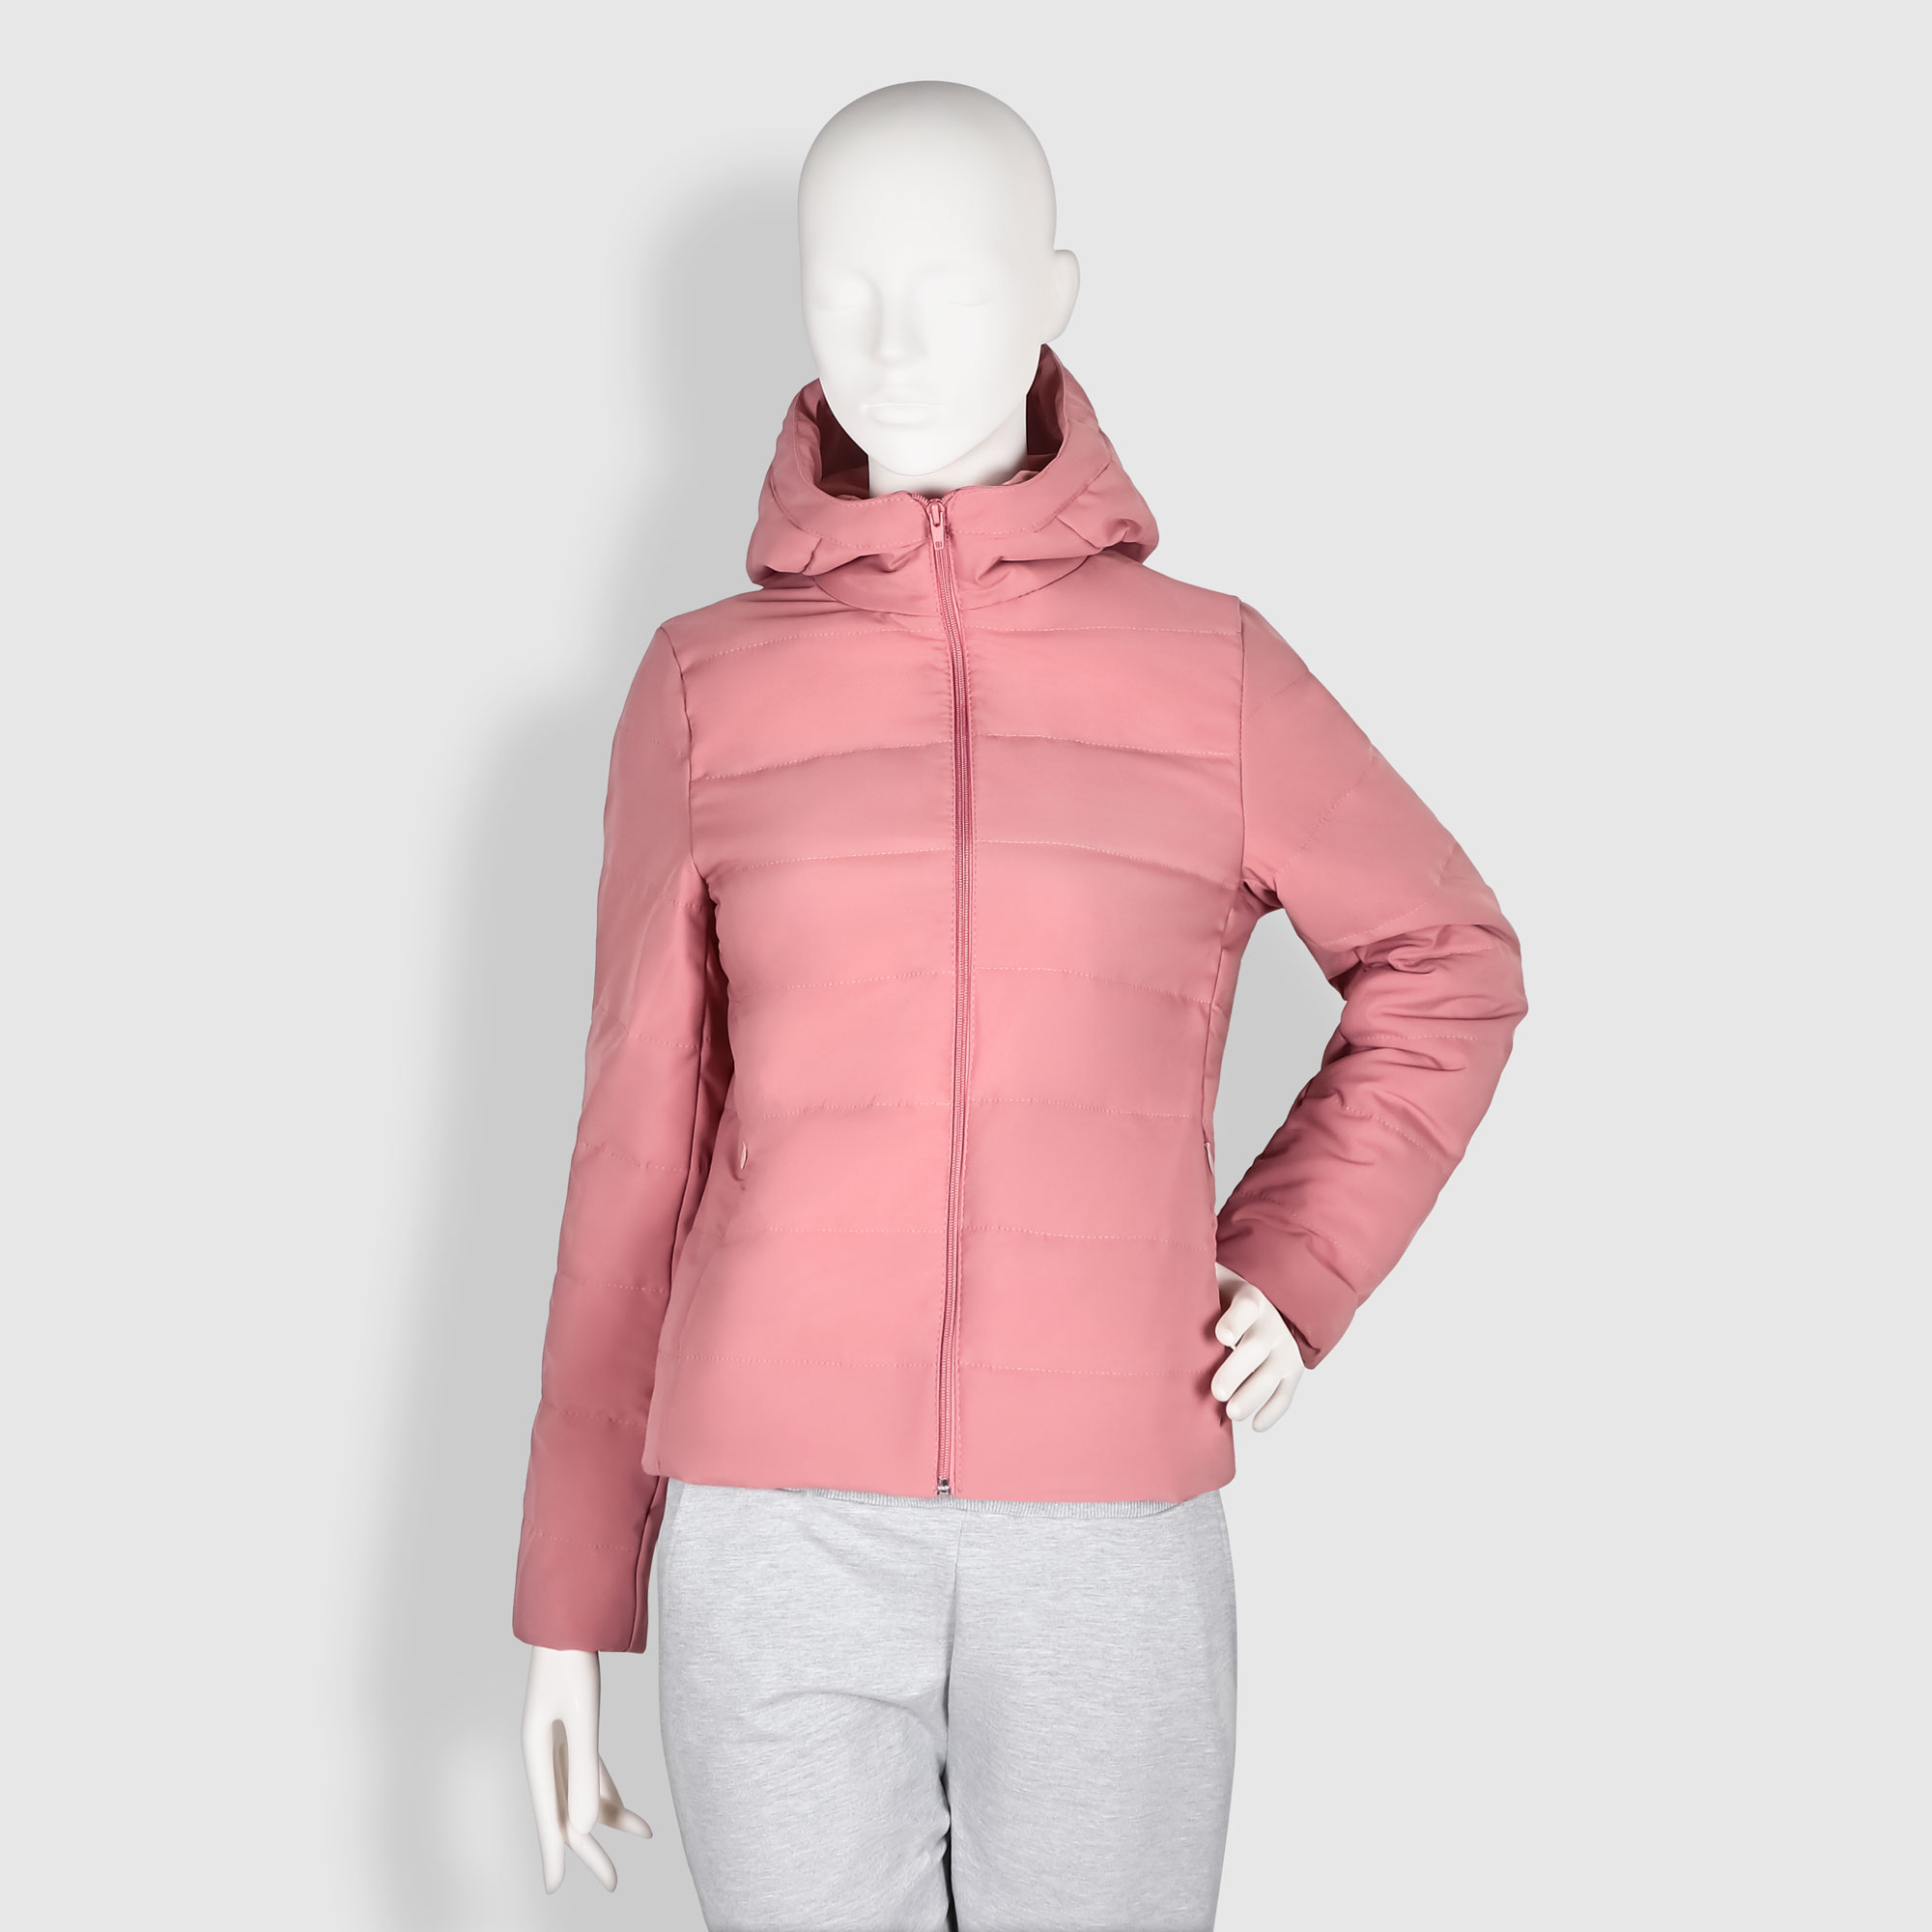 Женская куртка Мастер Пошива утепленная серо-розовая, цвет светло-розовый, размер S